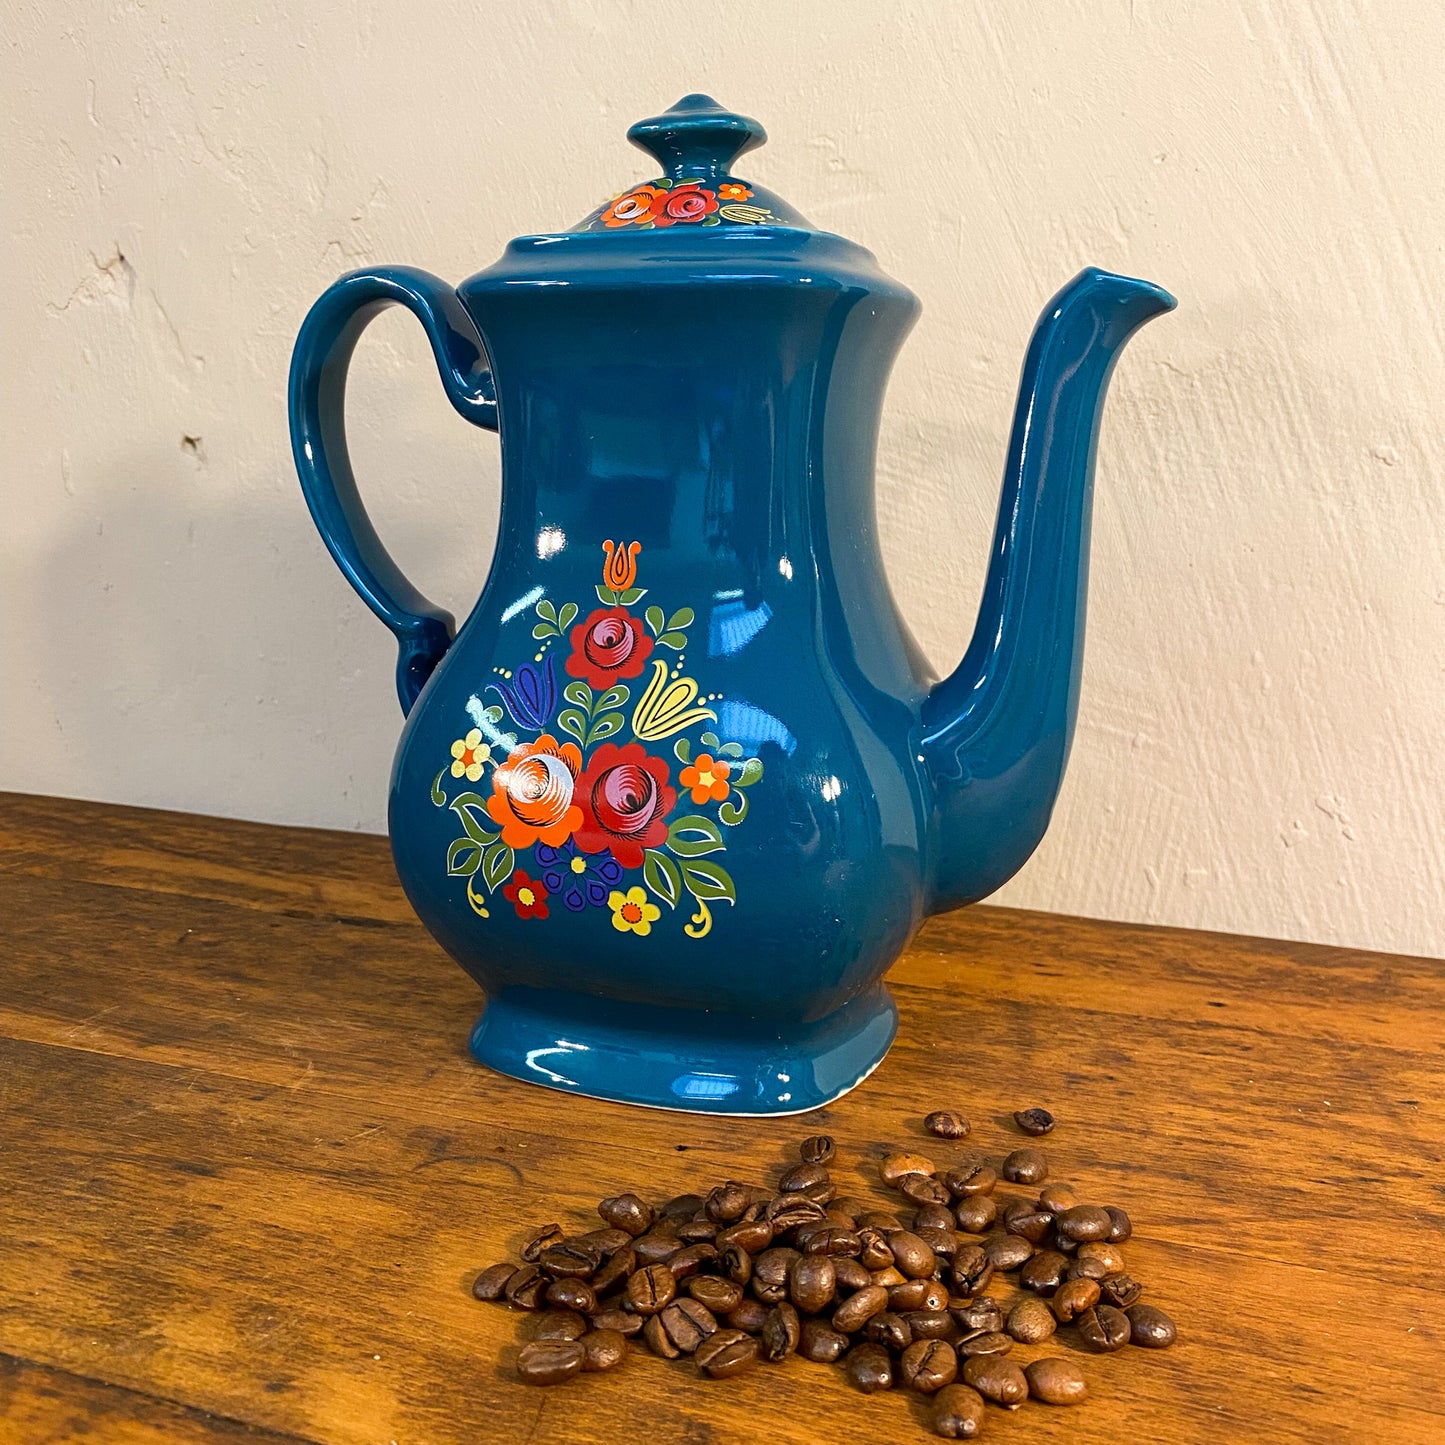 Hübsche Folklore Kaffeekanne in Petrol mit bunten Blumen